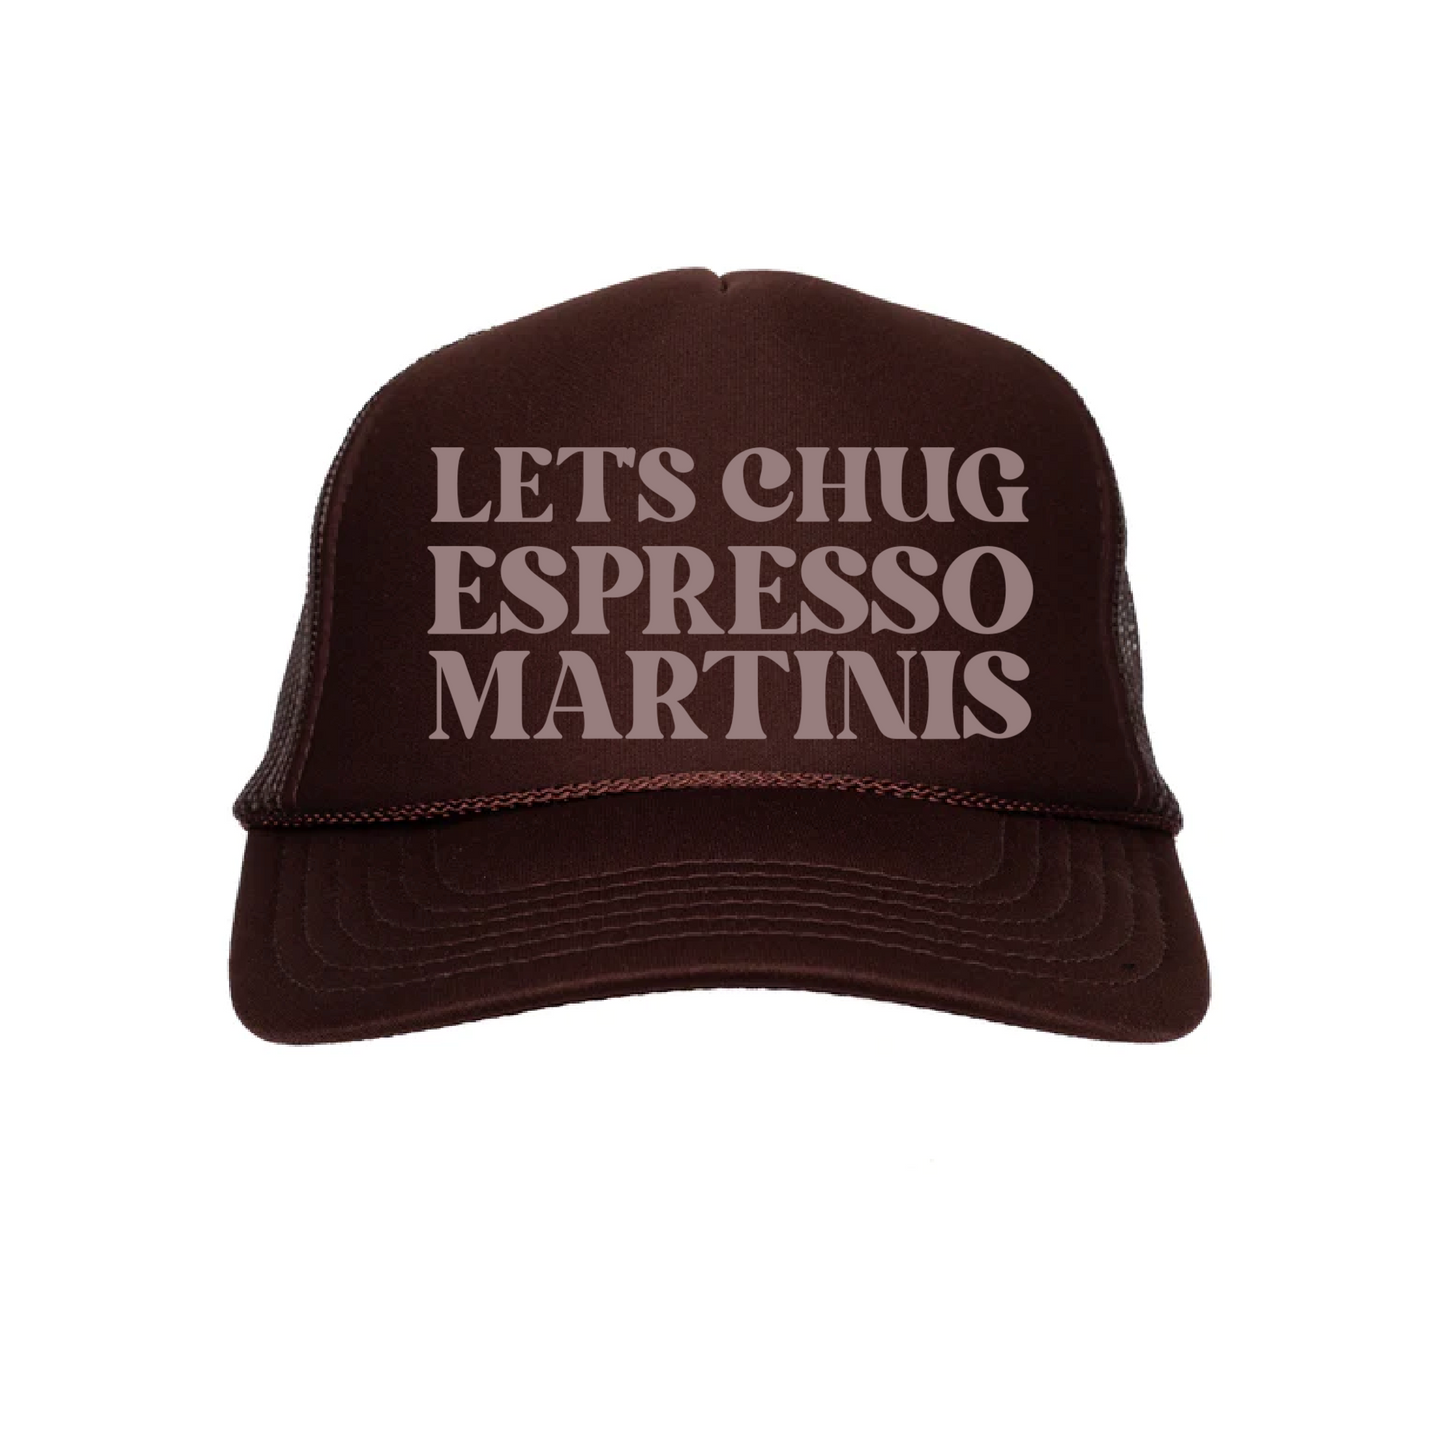 Let's Chug Espresso Martinis Trucker Cap/ Trucker Hat